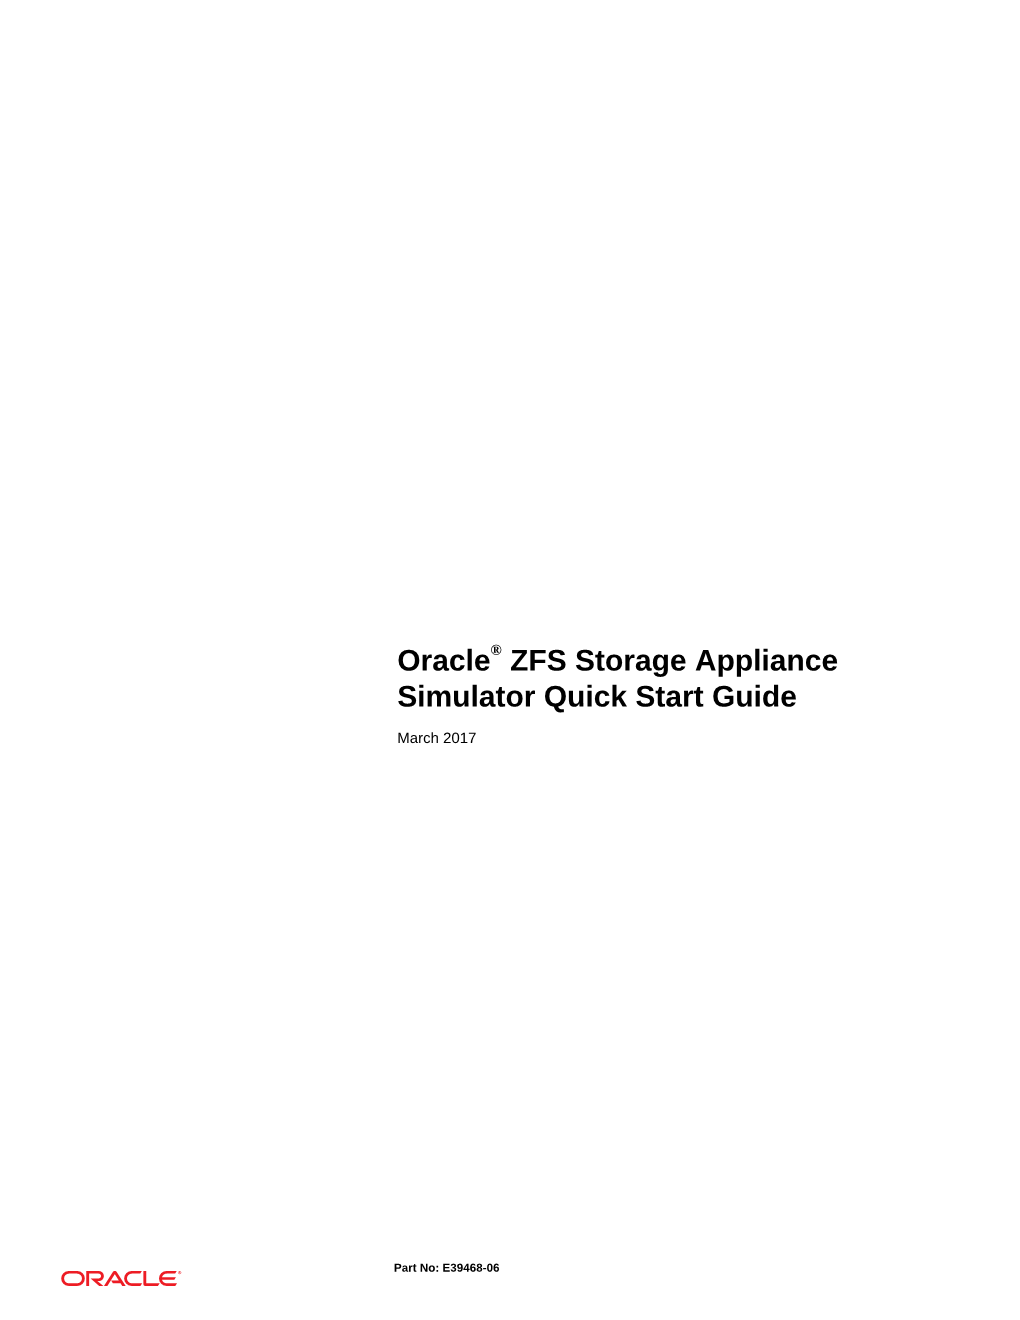 Oracle® ZFS Storage Appliance Simulator Quick Start Guide 2 ■ Vmware Workstation Package (Minimum Version 10)